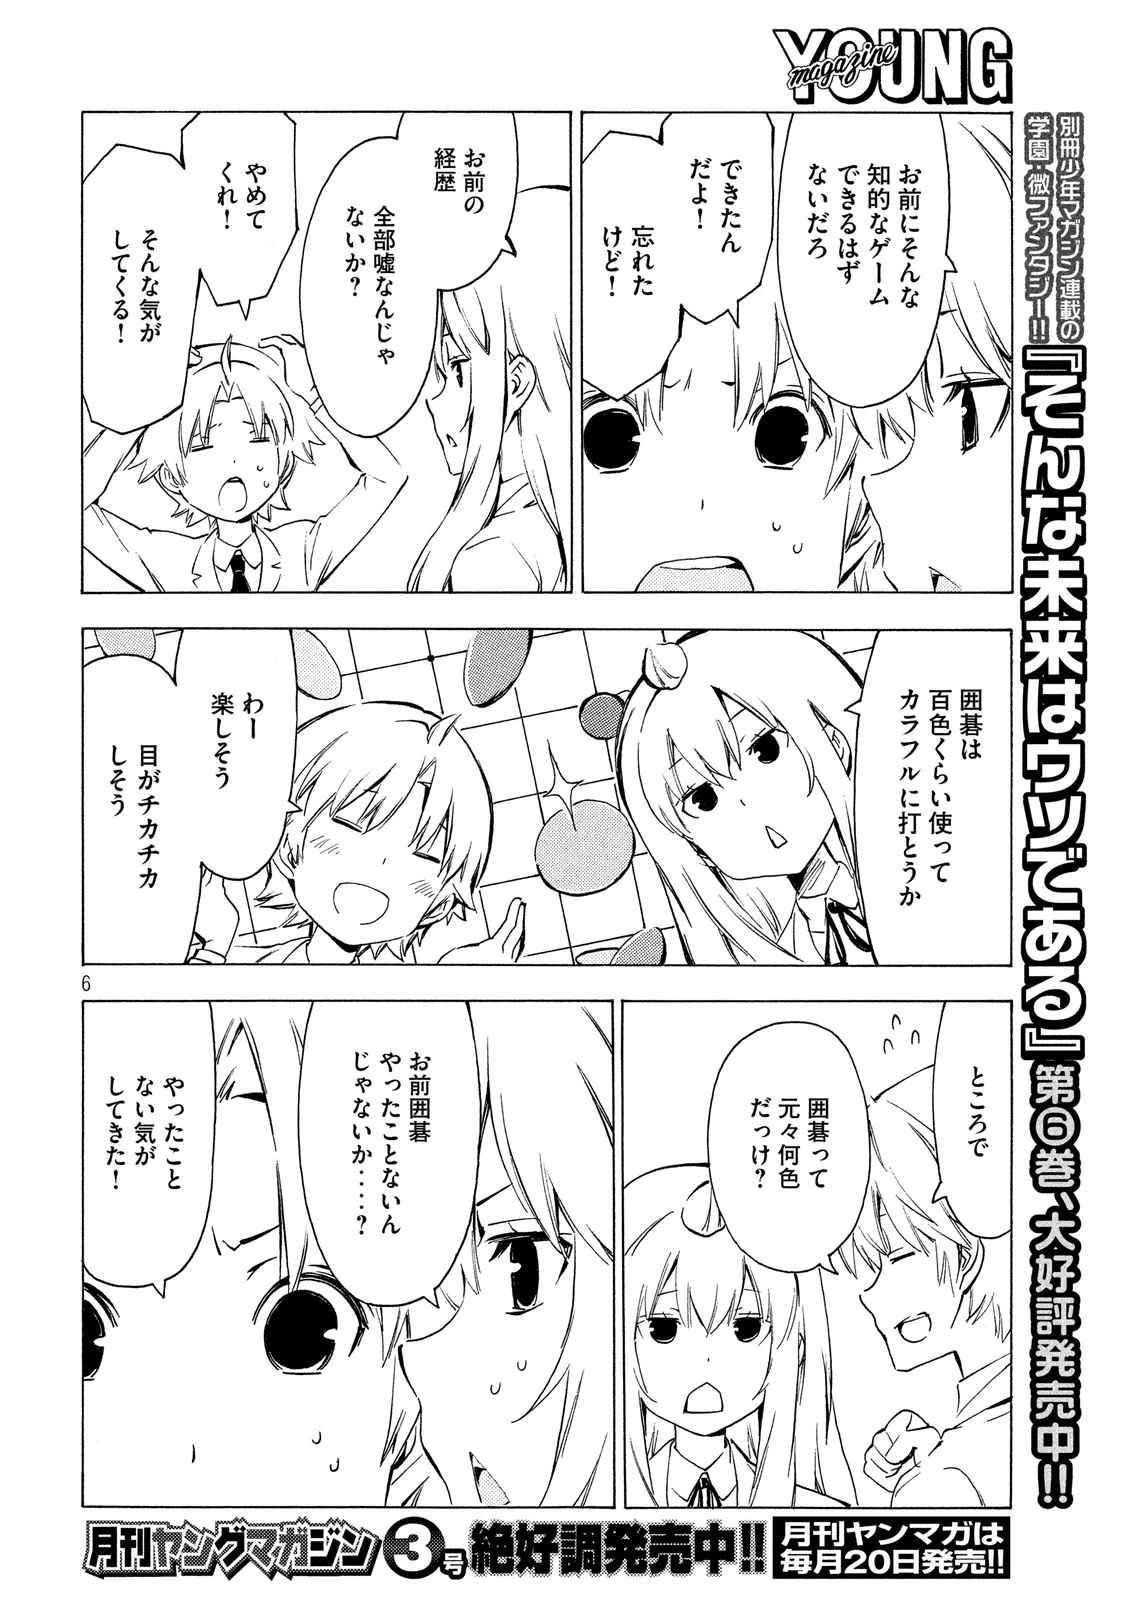 Minami-ke - Chapter 312 - Page 6